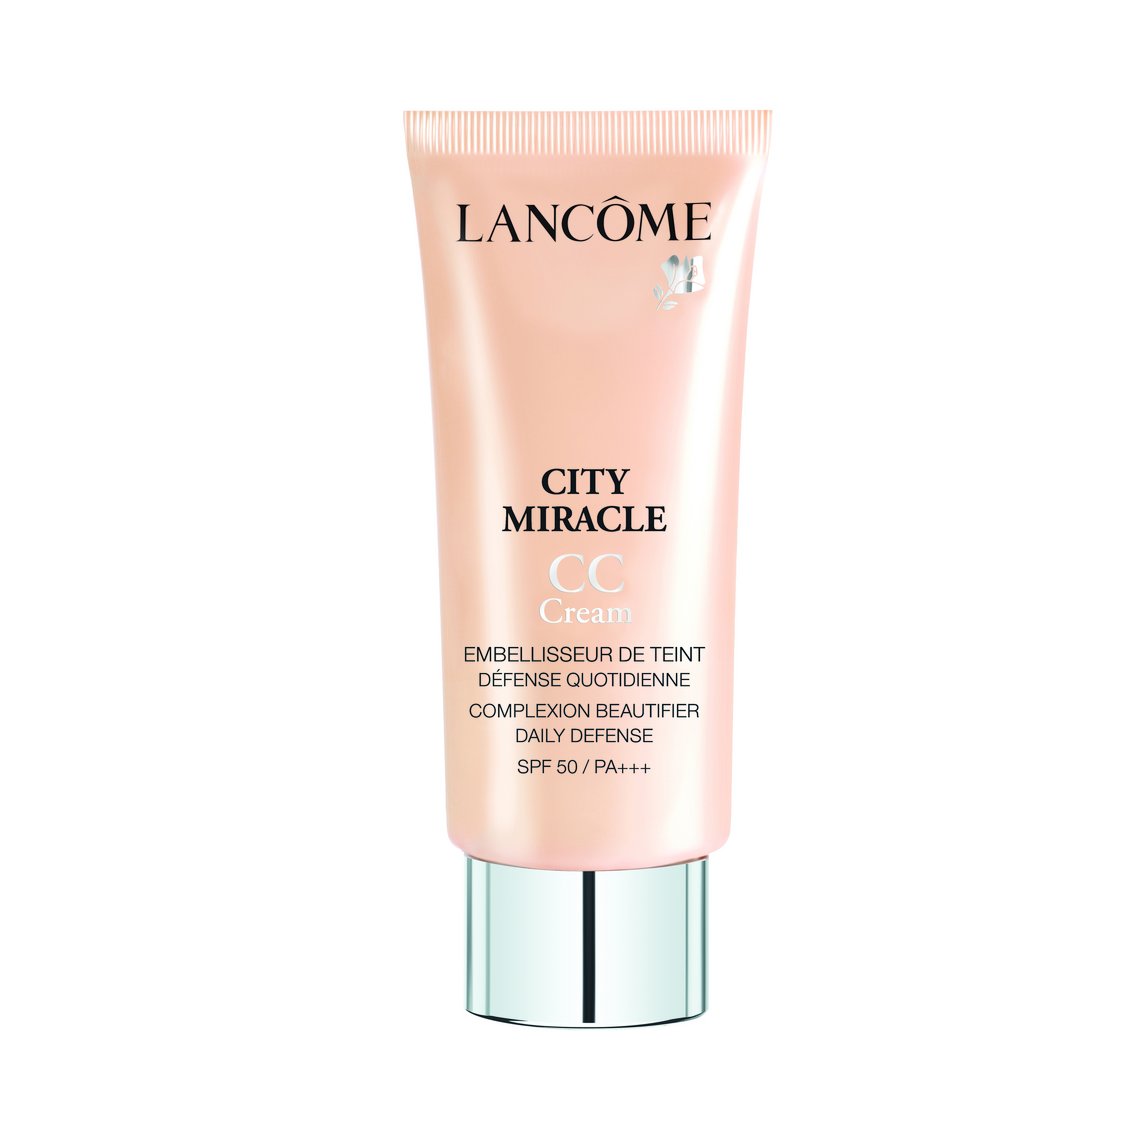 City Miracle CC Cream: Lancôme